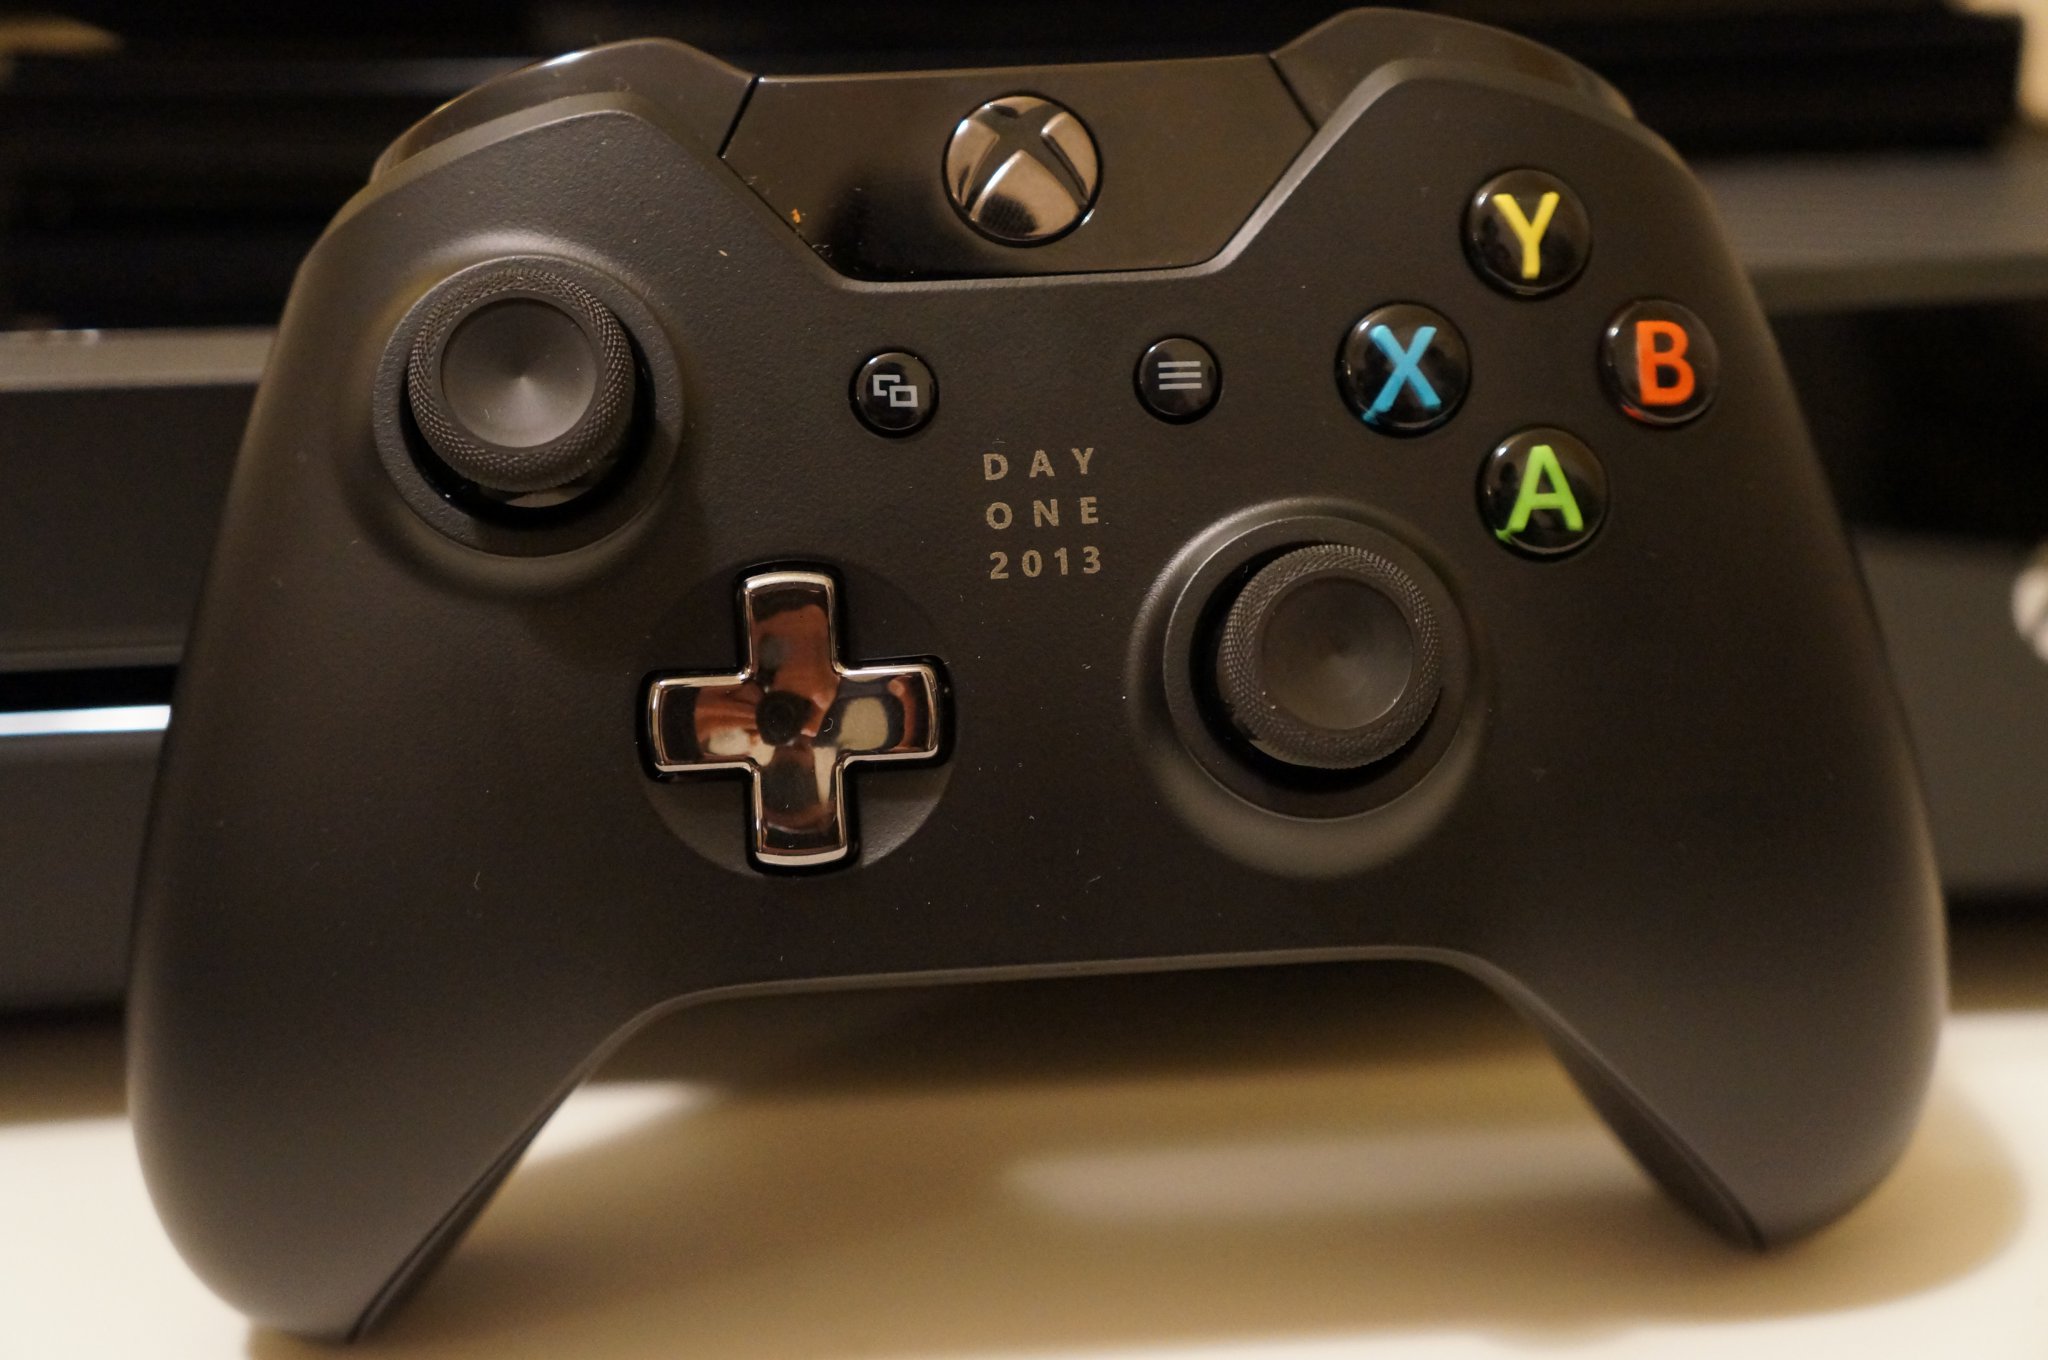 Control 01. Иксбокс 1. Геймпад Xbox Day one. Геймпад Xbox one 2013. Xbox 2014.